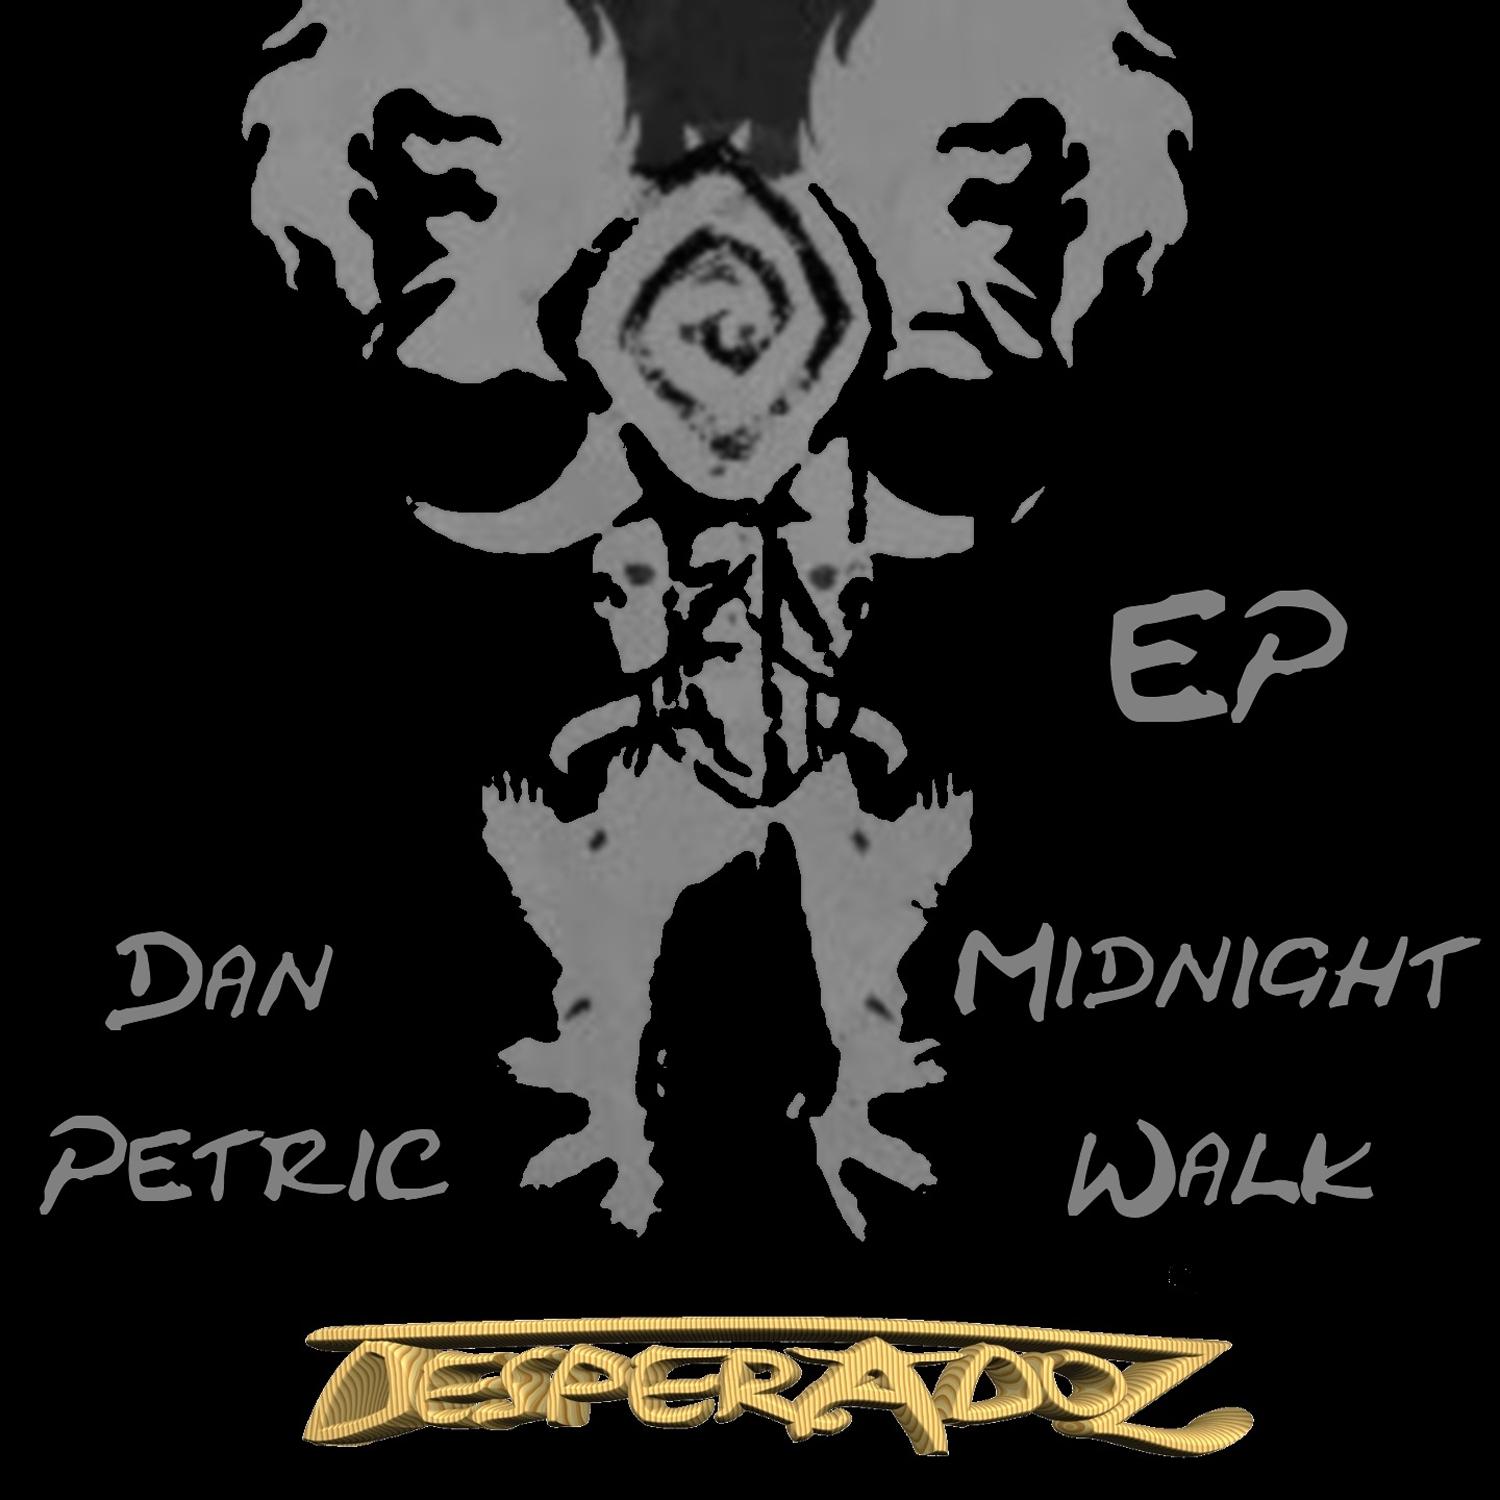 Midnight Walk (Dan Petric)